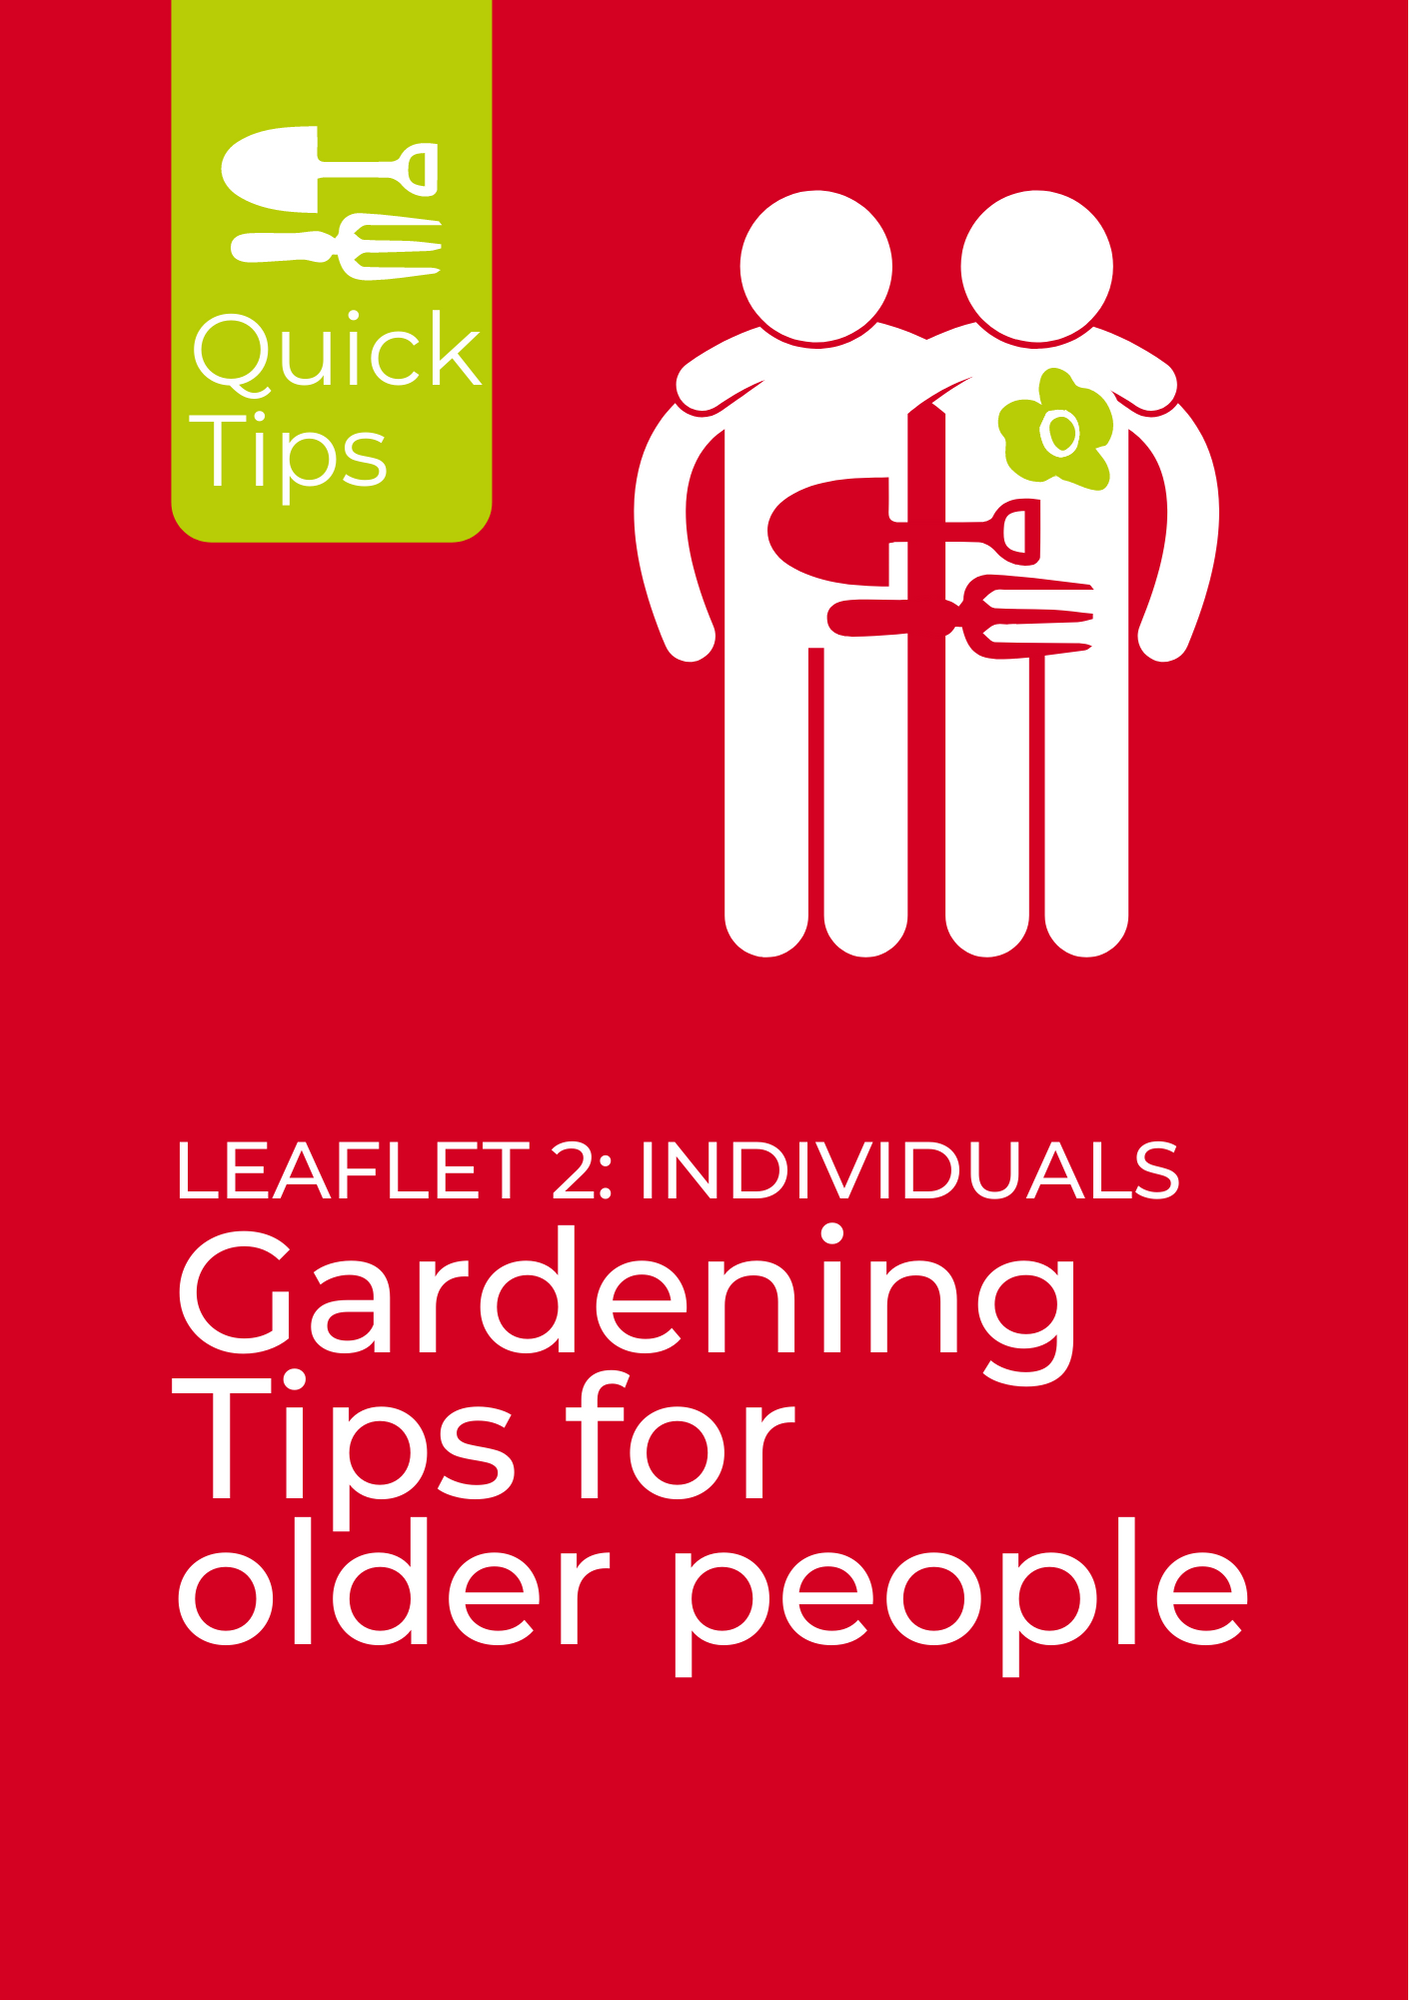 Gardening tips for older people - leaflet for individuals